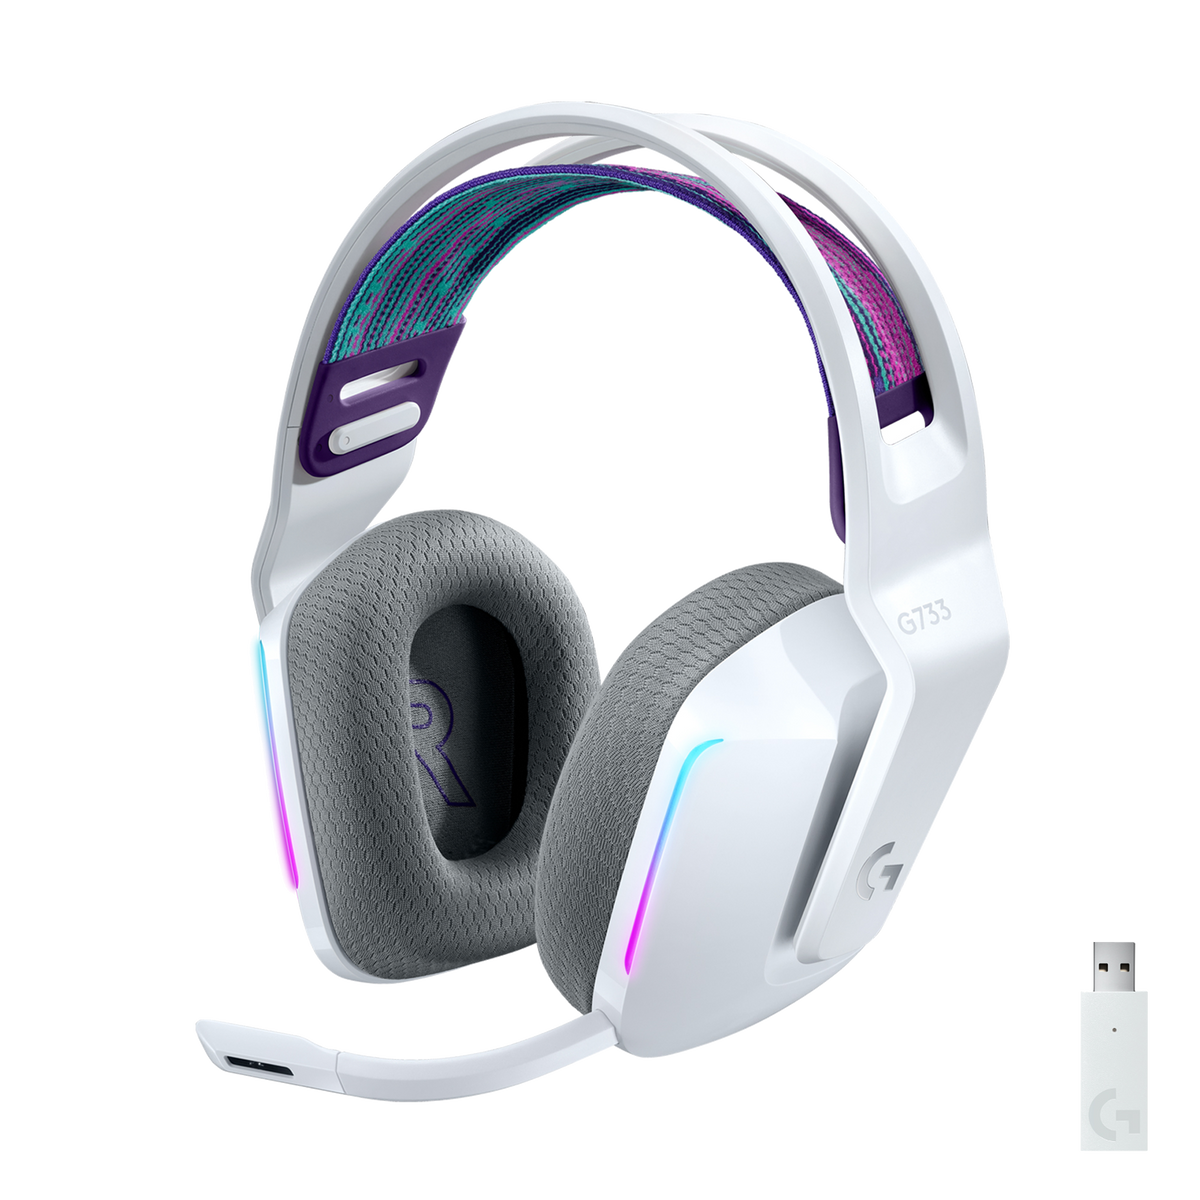 981-000883 LOGITECH LIGHTSPEED Headset Gaming Weiß Over-ear G733 WHITE, G